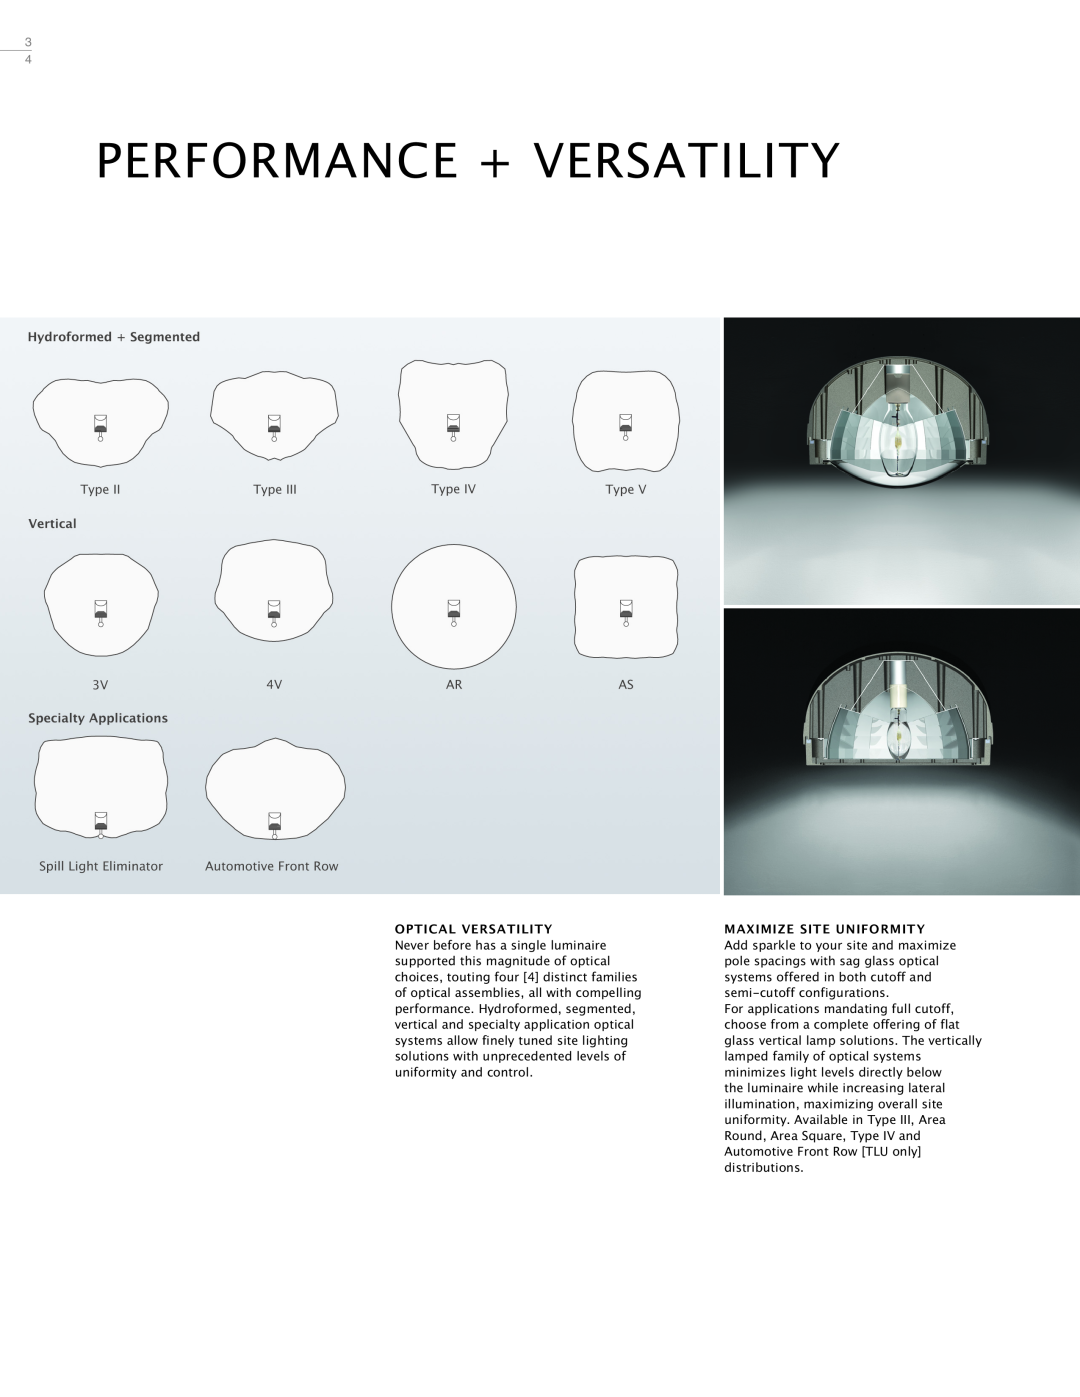 Cooper Lighting Area Luminaire manual Performance + Versatility, Optical Versatility, Maximize Site Uniformity 